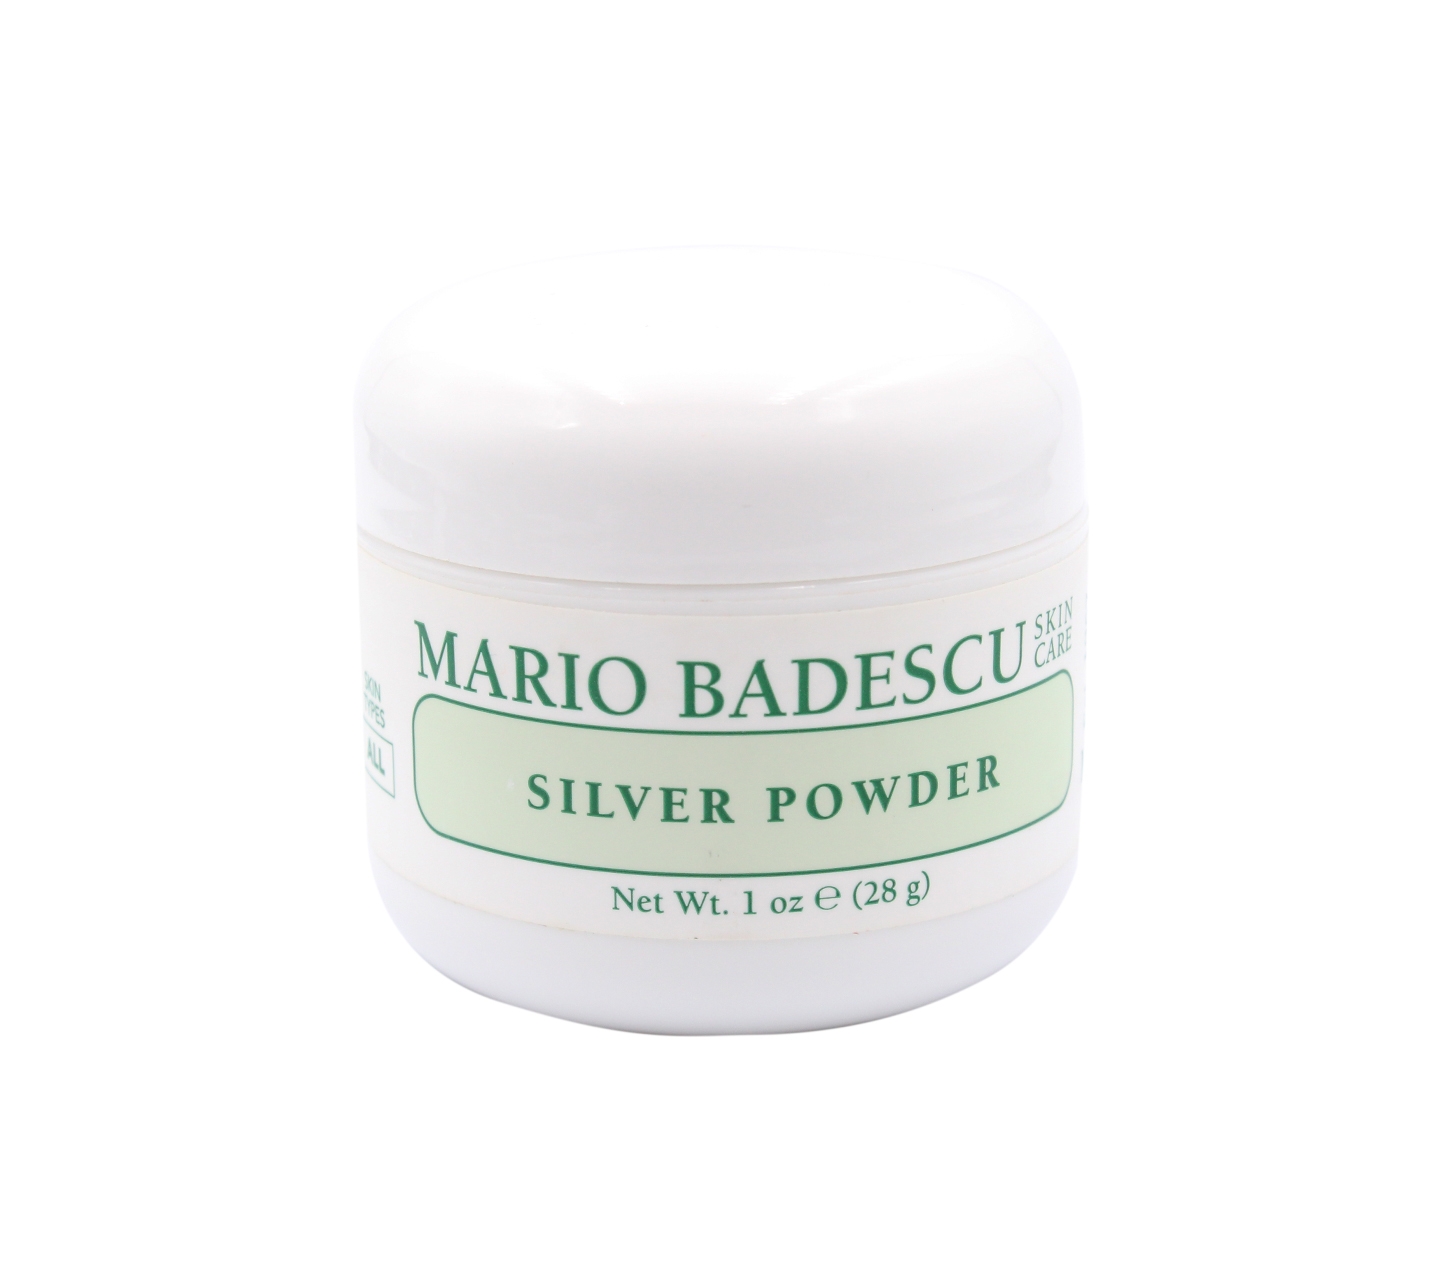 Mario Badescu Silver Powder Skin Care